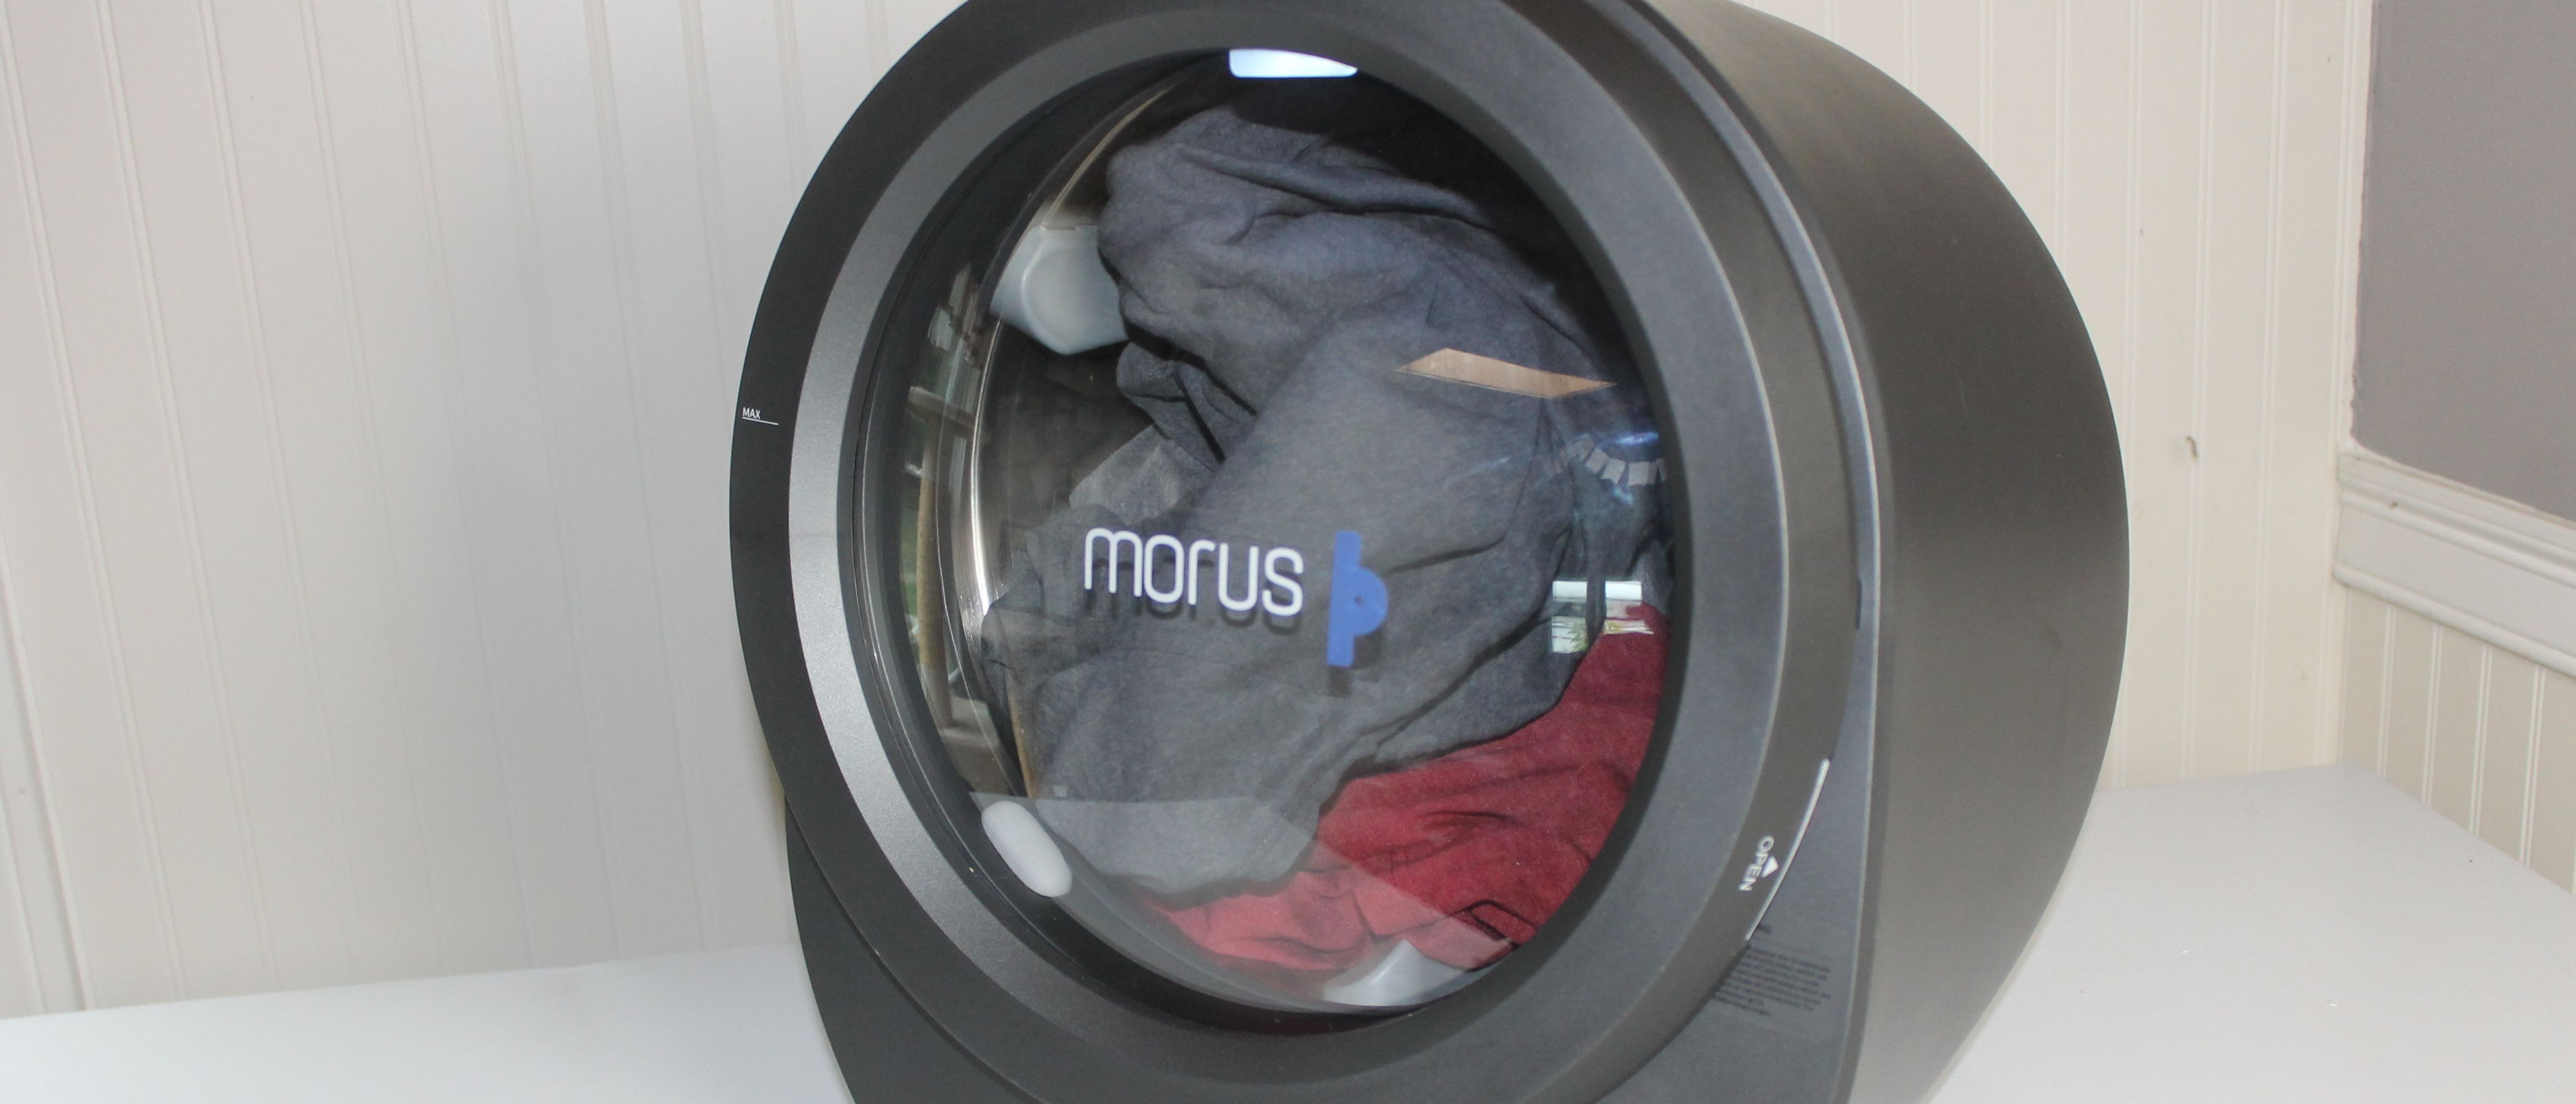 Product Finds! Morus Portable Dryer  Portable dryer, Clothes dryer,  Mini dryer